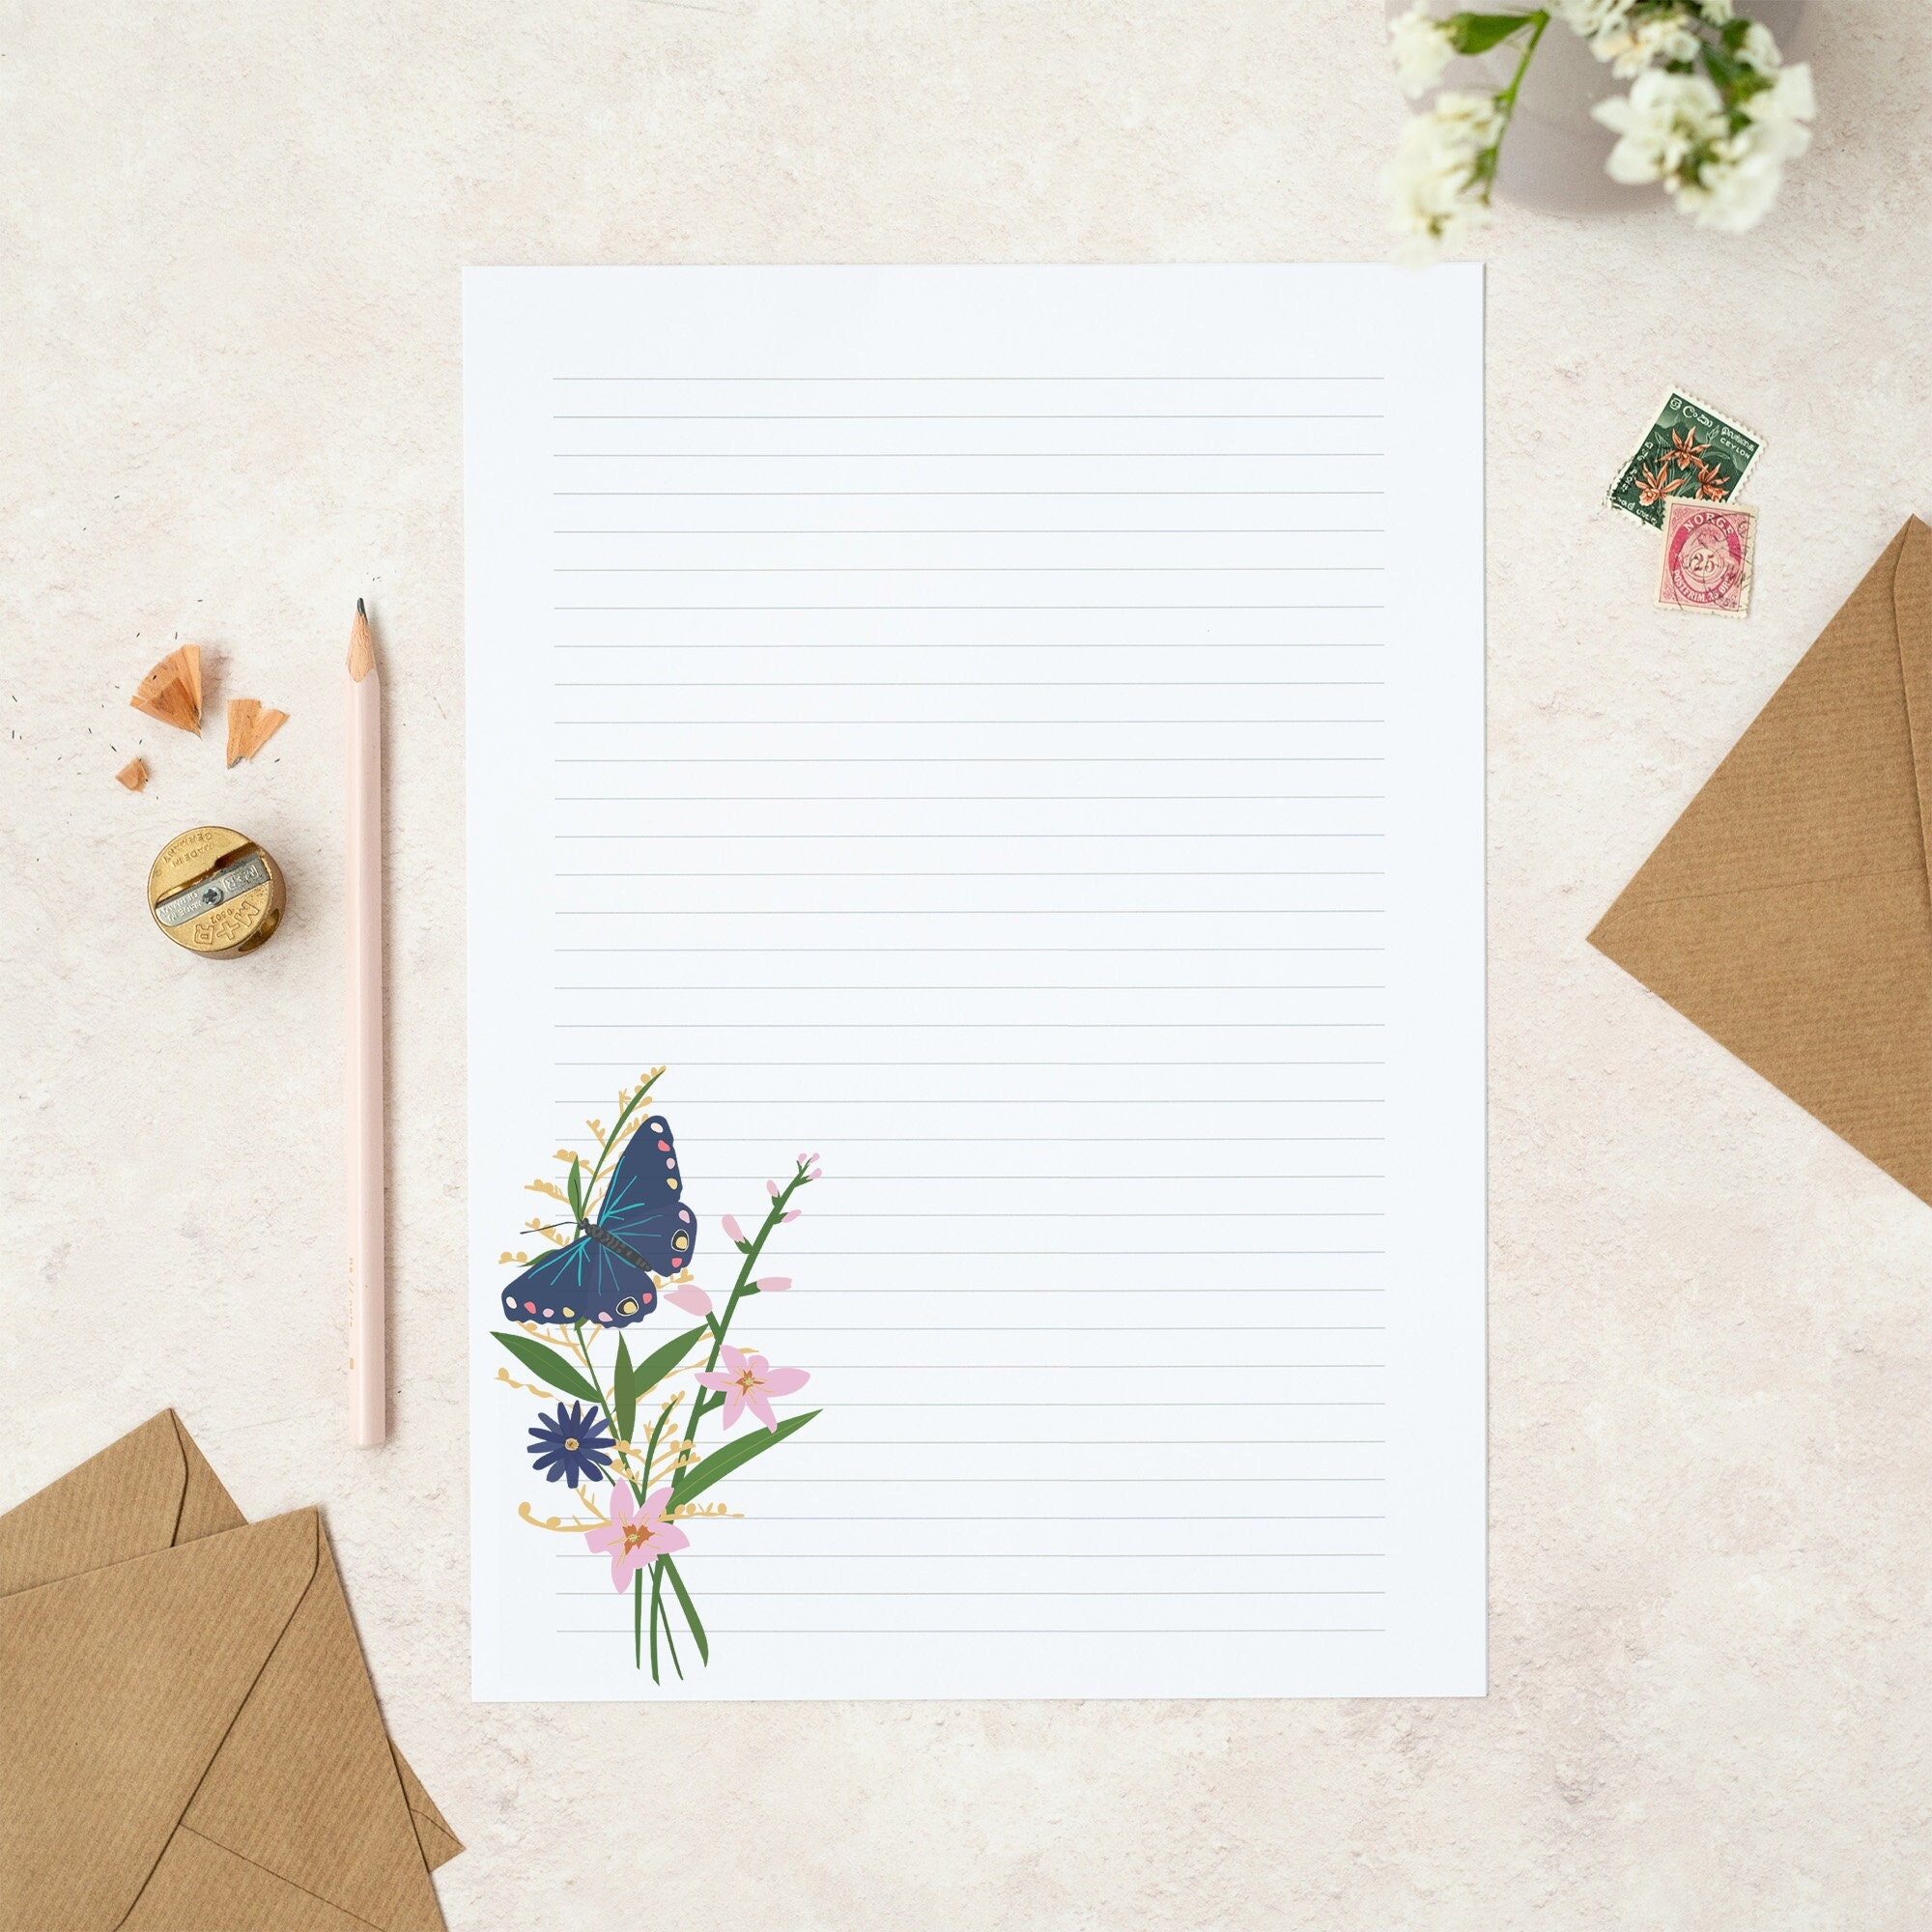 Printable Floral Letter Paper, Letter Writing Paper, Letter Stationery, Letter  Writing Set, Pretty Letter Paper, Writing Paper 